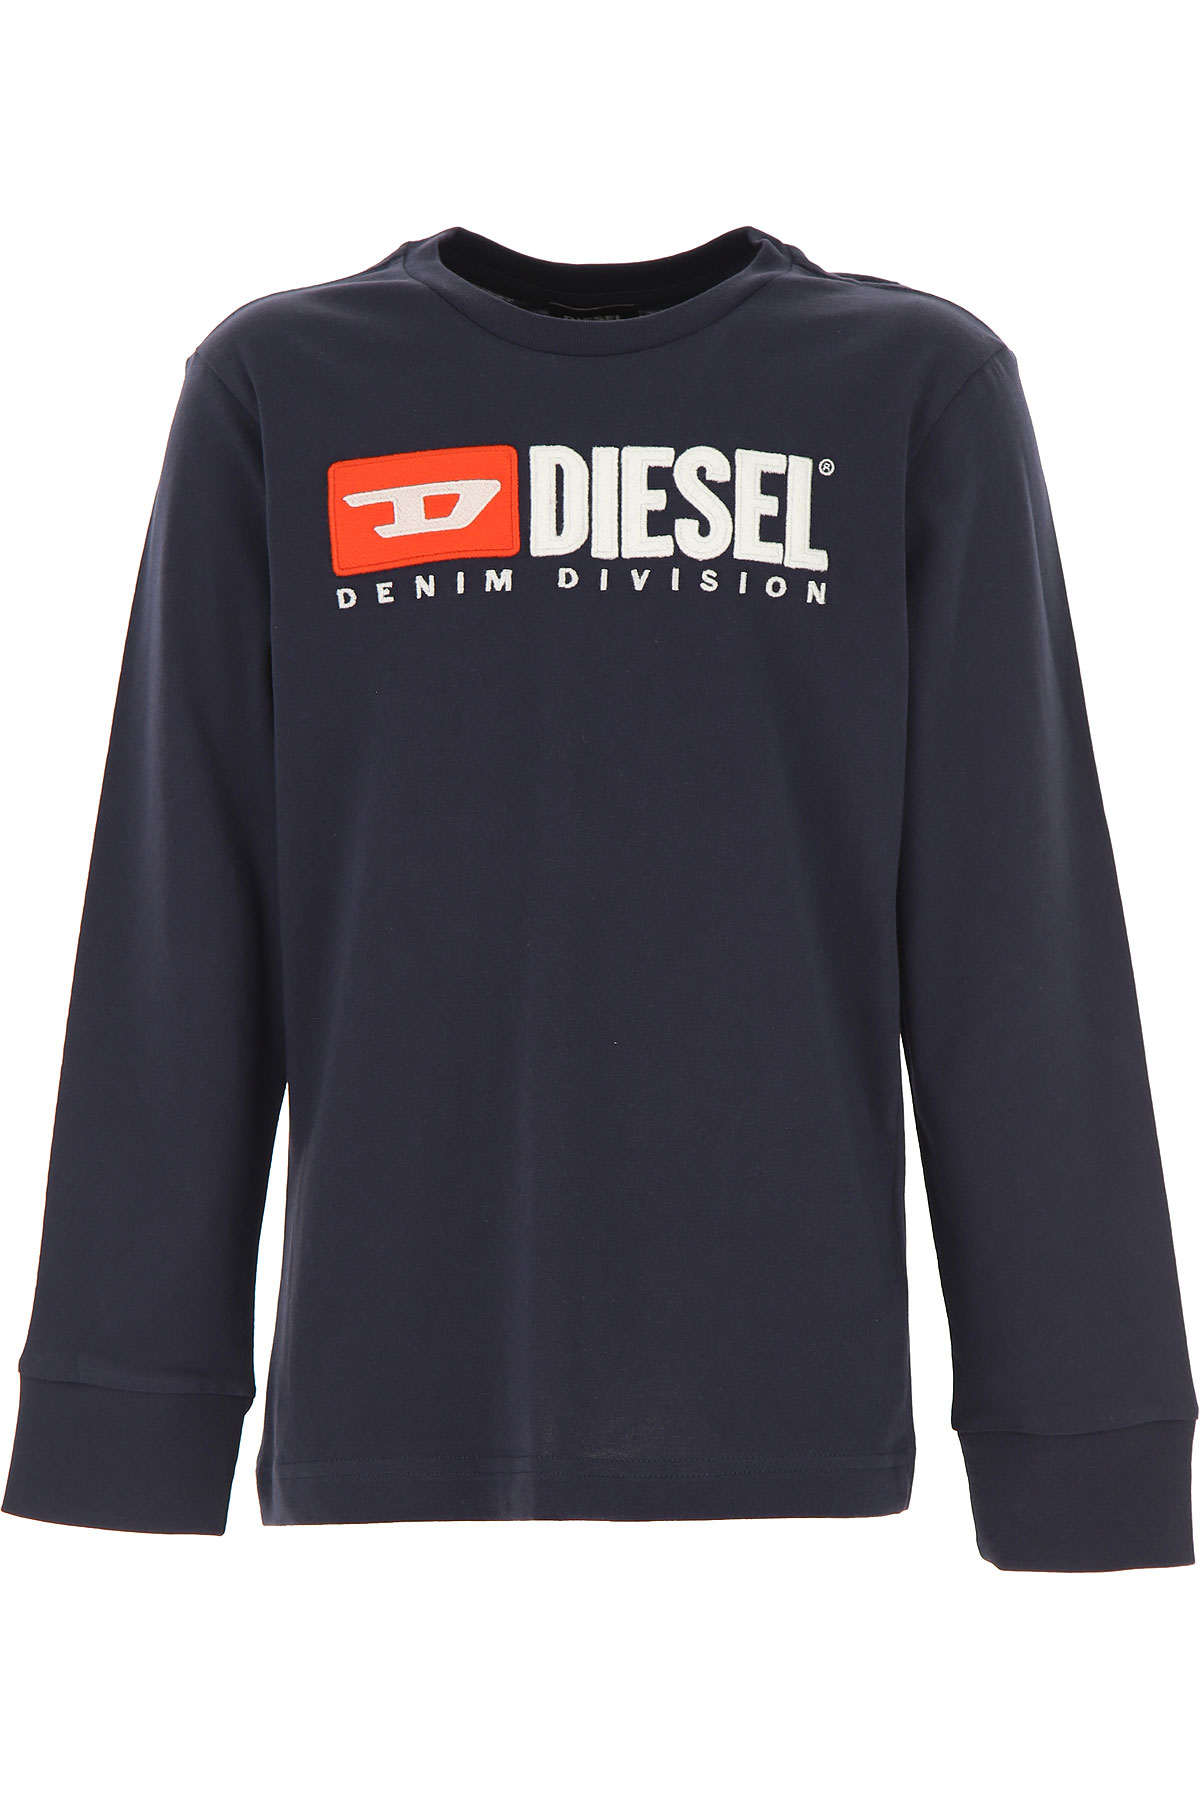 Diesel Kinder T-Shirt für Jungen Günstig im Sale, Dunkel Marineblau, Baumwolle, 2017, 10Y 12Y 14Y 16Y 4Y 6Y 8Y